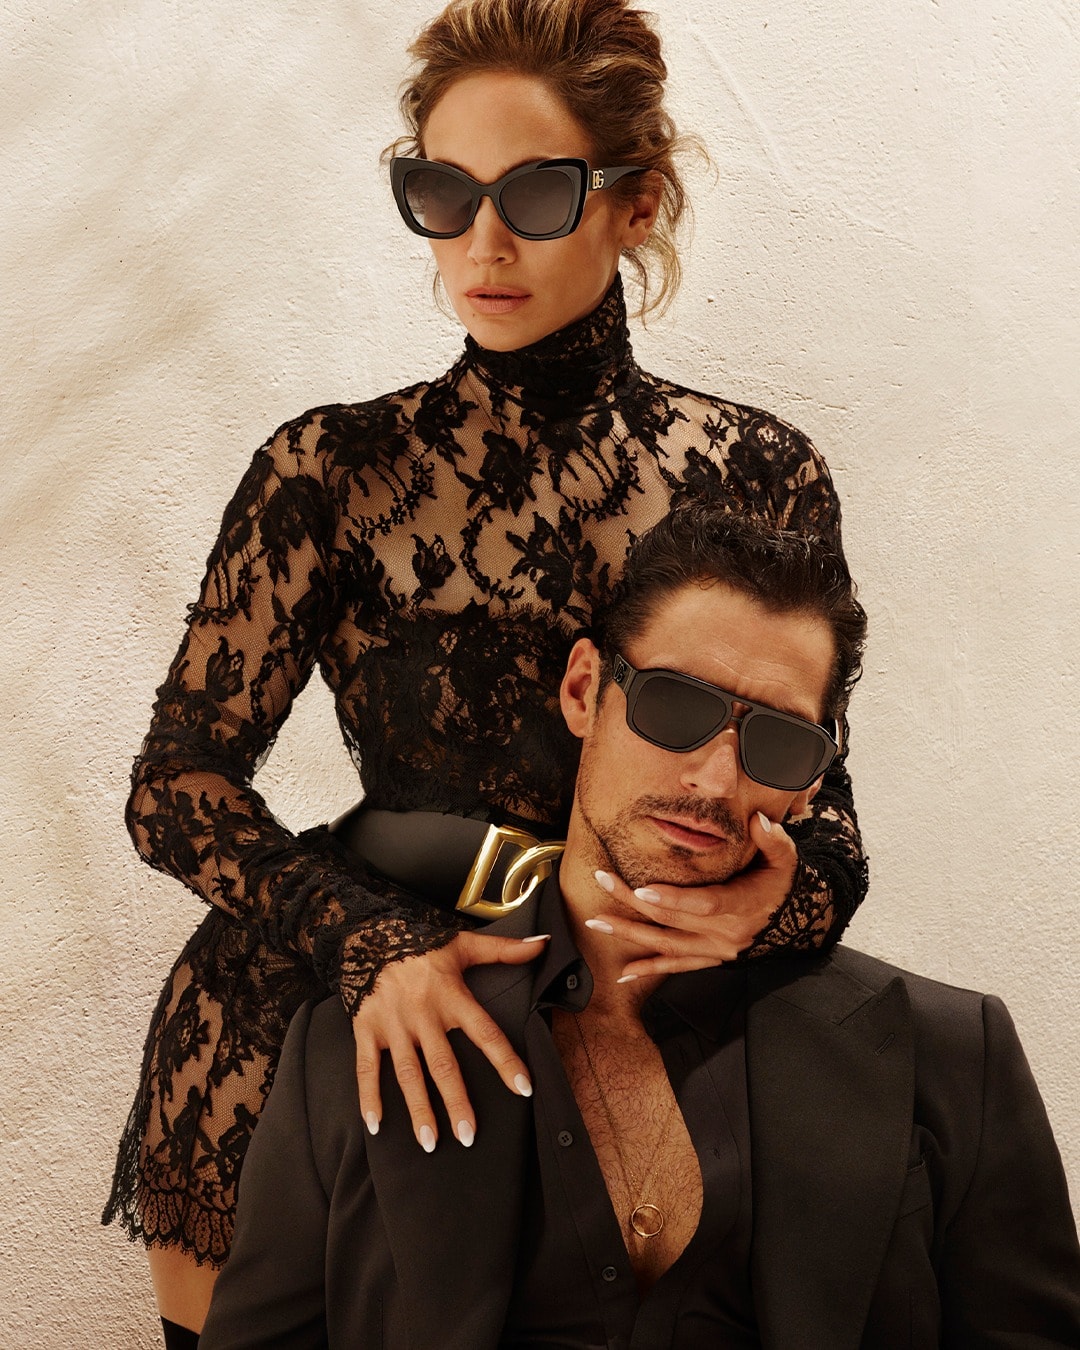 Jennifer Lopez posing with English male fashion model David James Gandy in Dolce & Gabbana’s Spring 2022 eyewear campaign